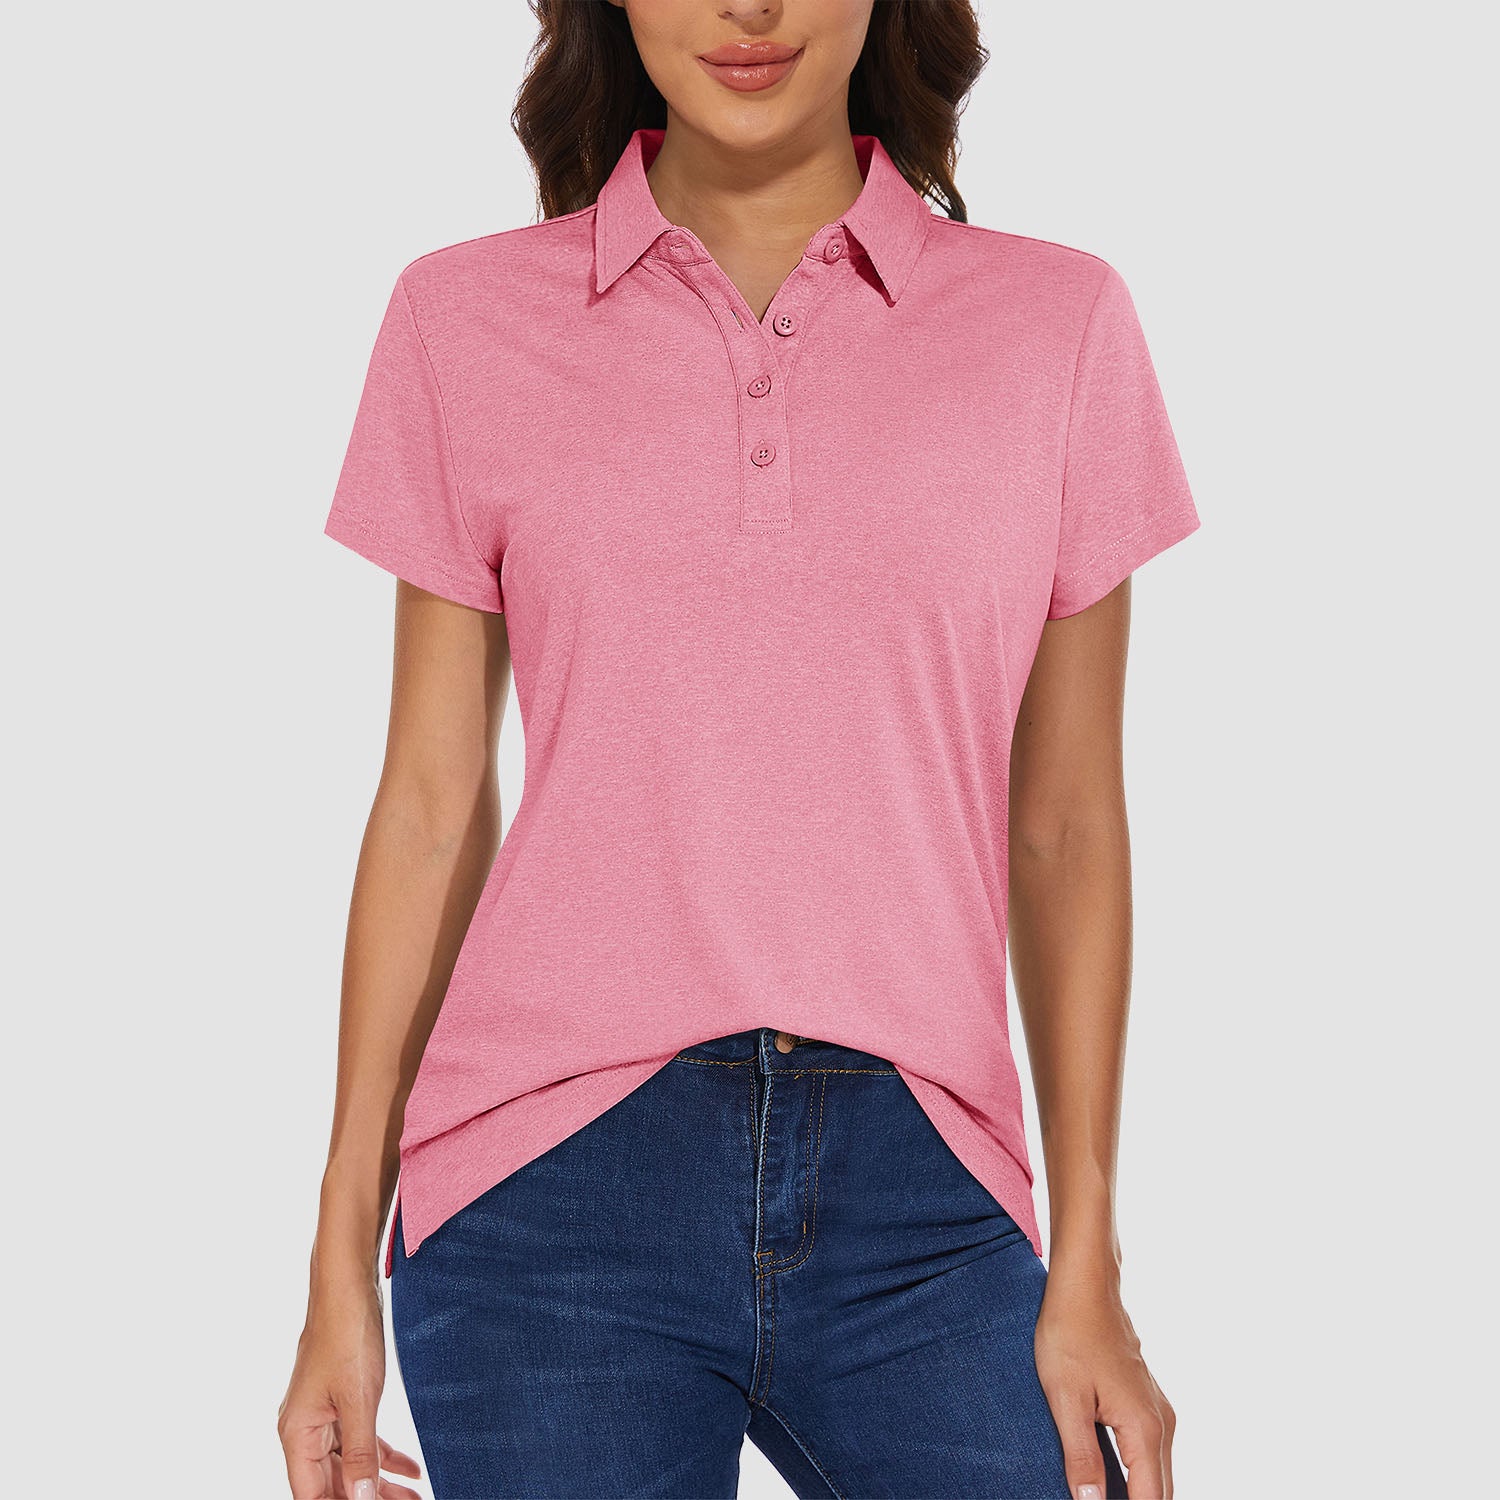 Women's Polo T-shirt 4 Buttons Casual T-Shirts Quick Dry Short Sleeve Golf Shirt